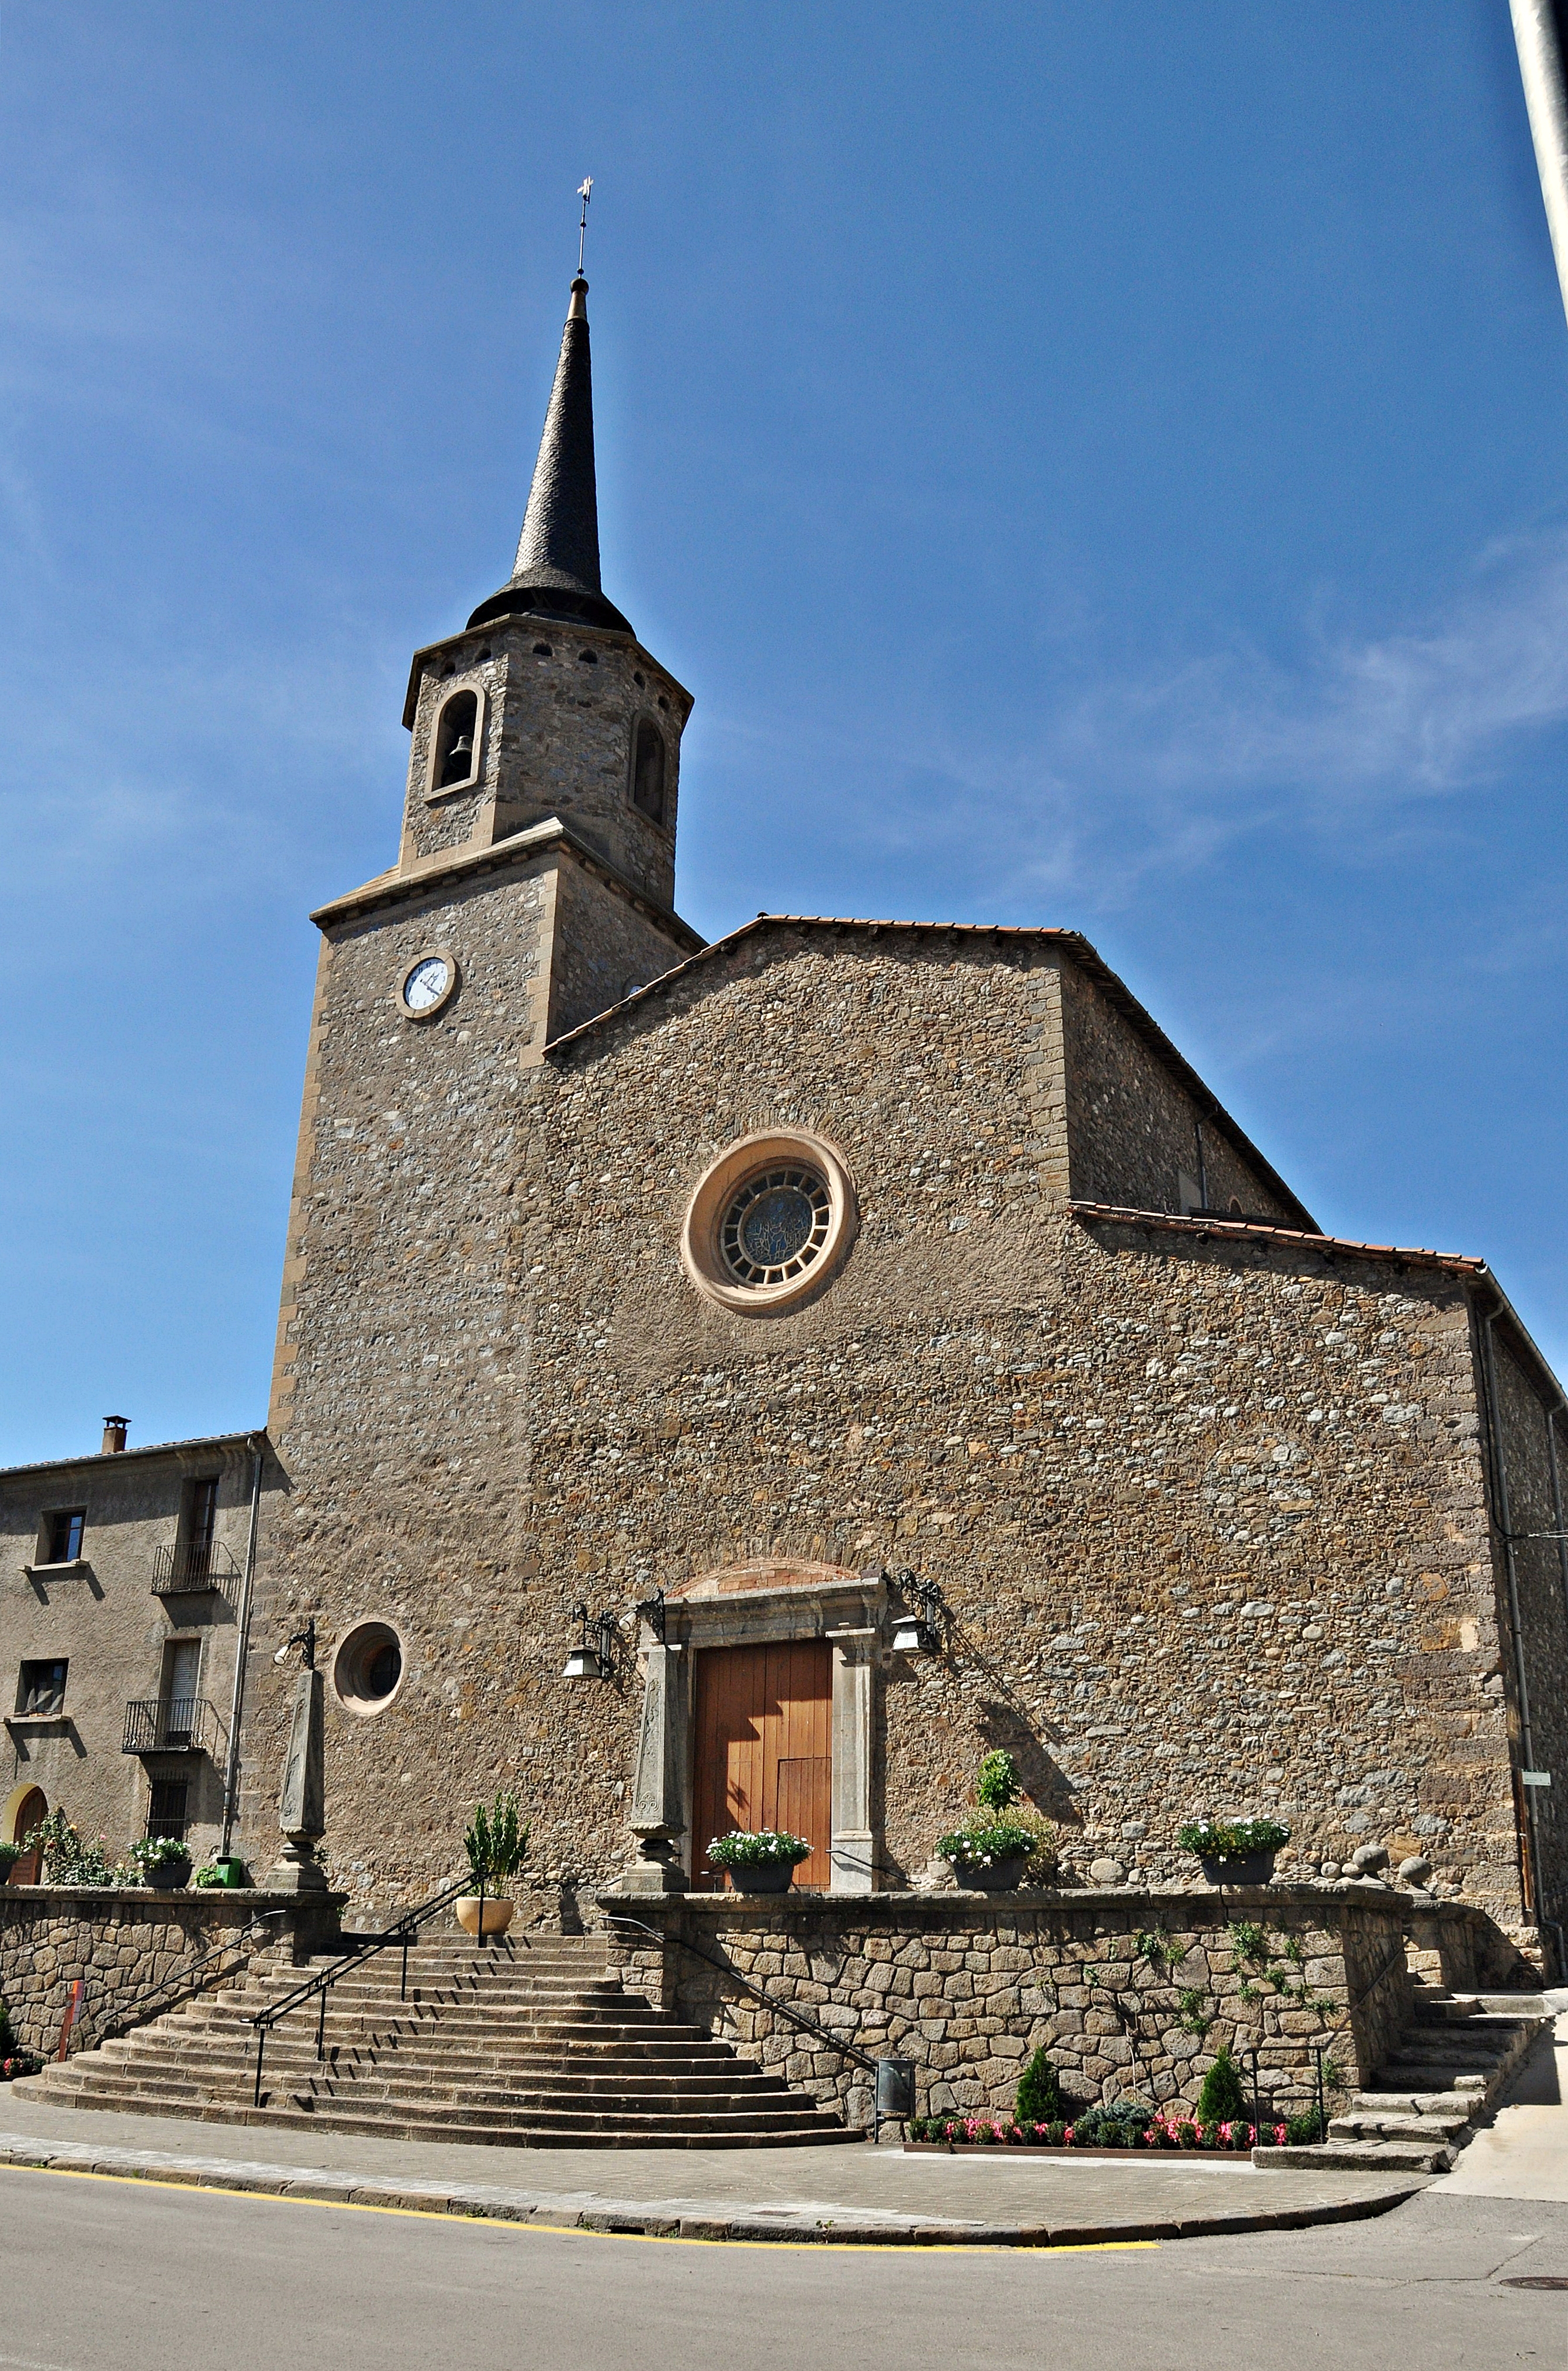 File:Iglesia de sant cristofol-9-2013 (3).JPG - Wikimedia Commons